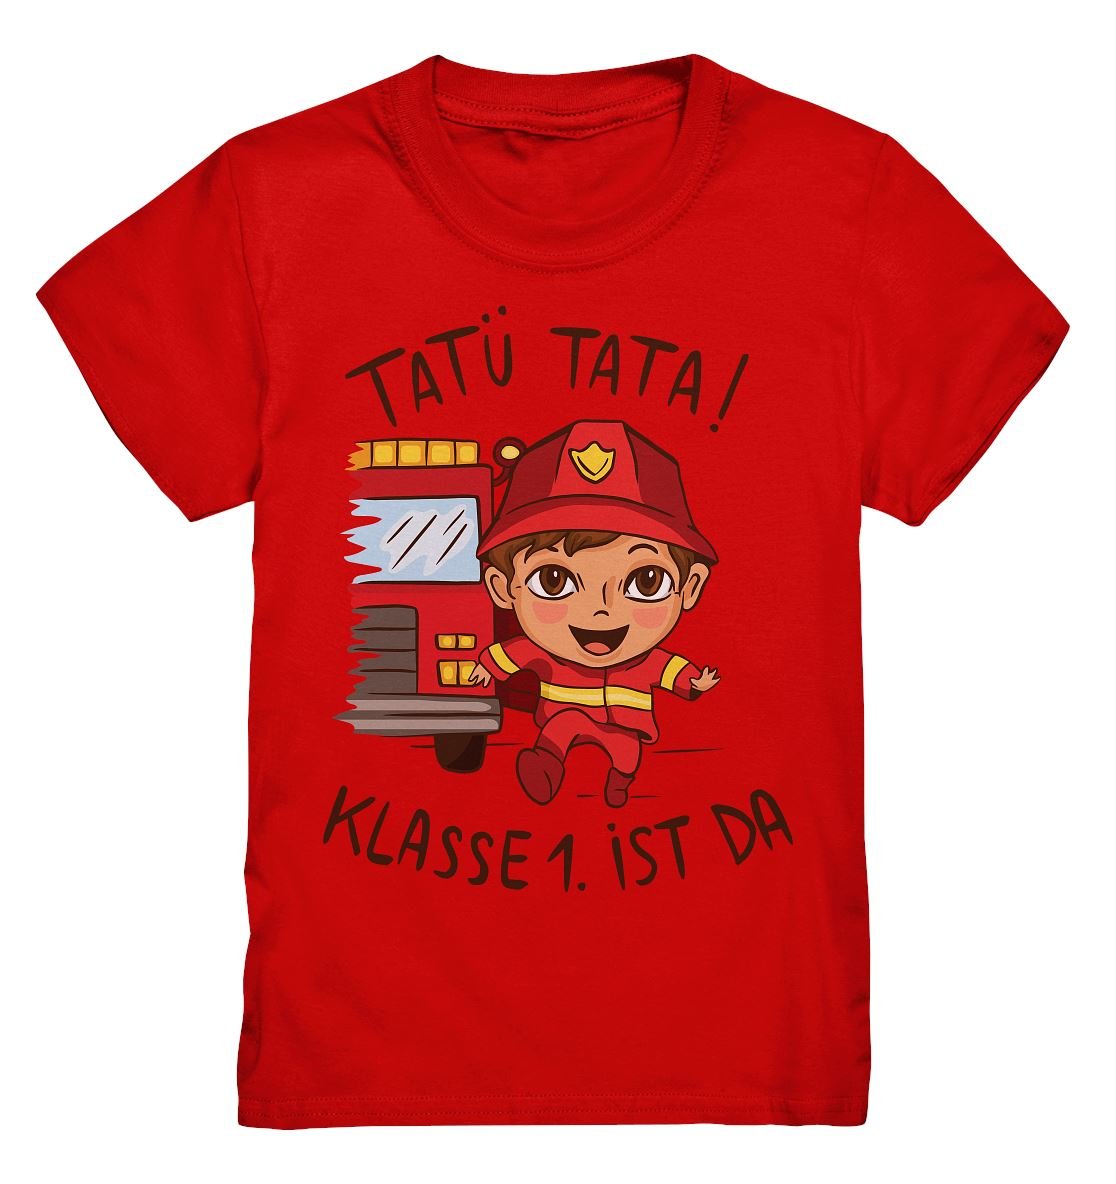 Tatü Tata Klasse 1 ist da - Kids Premium Shirt - BINYA